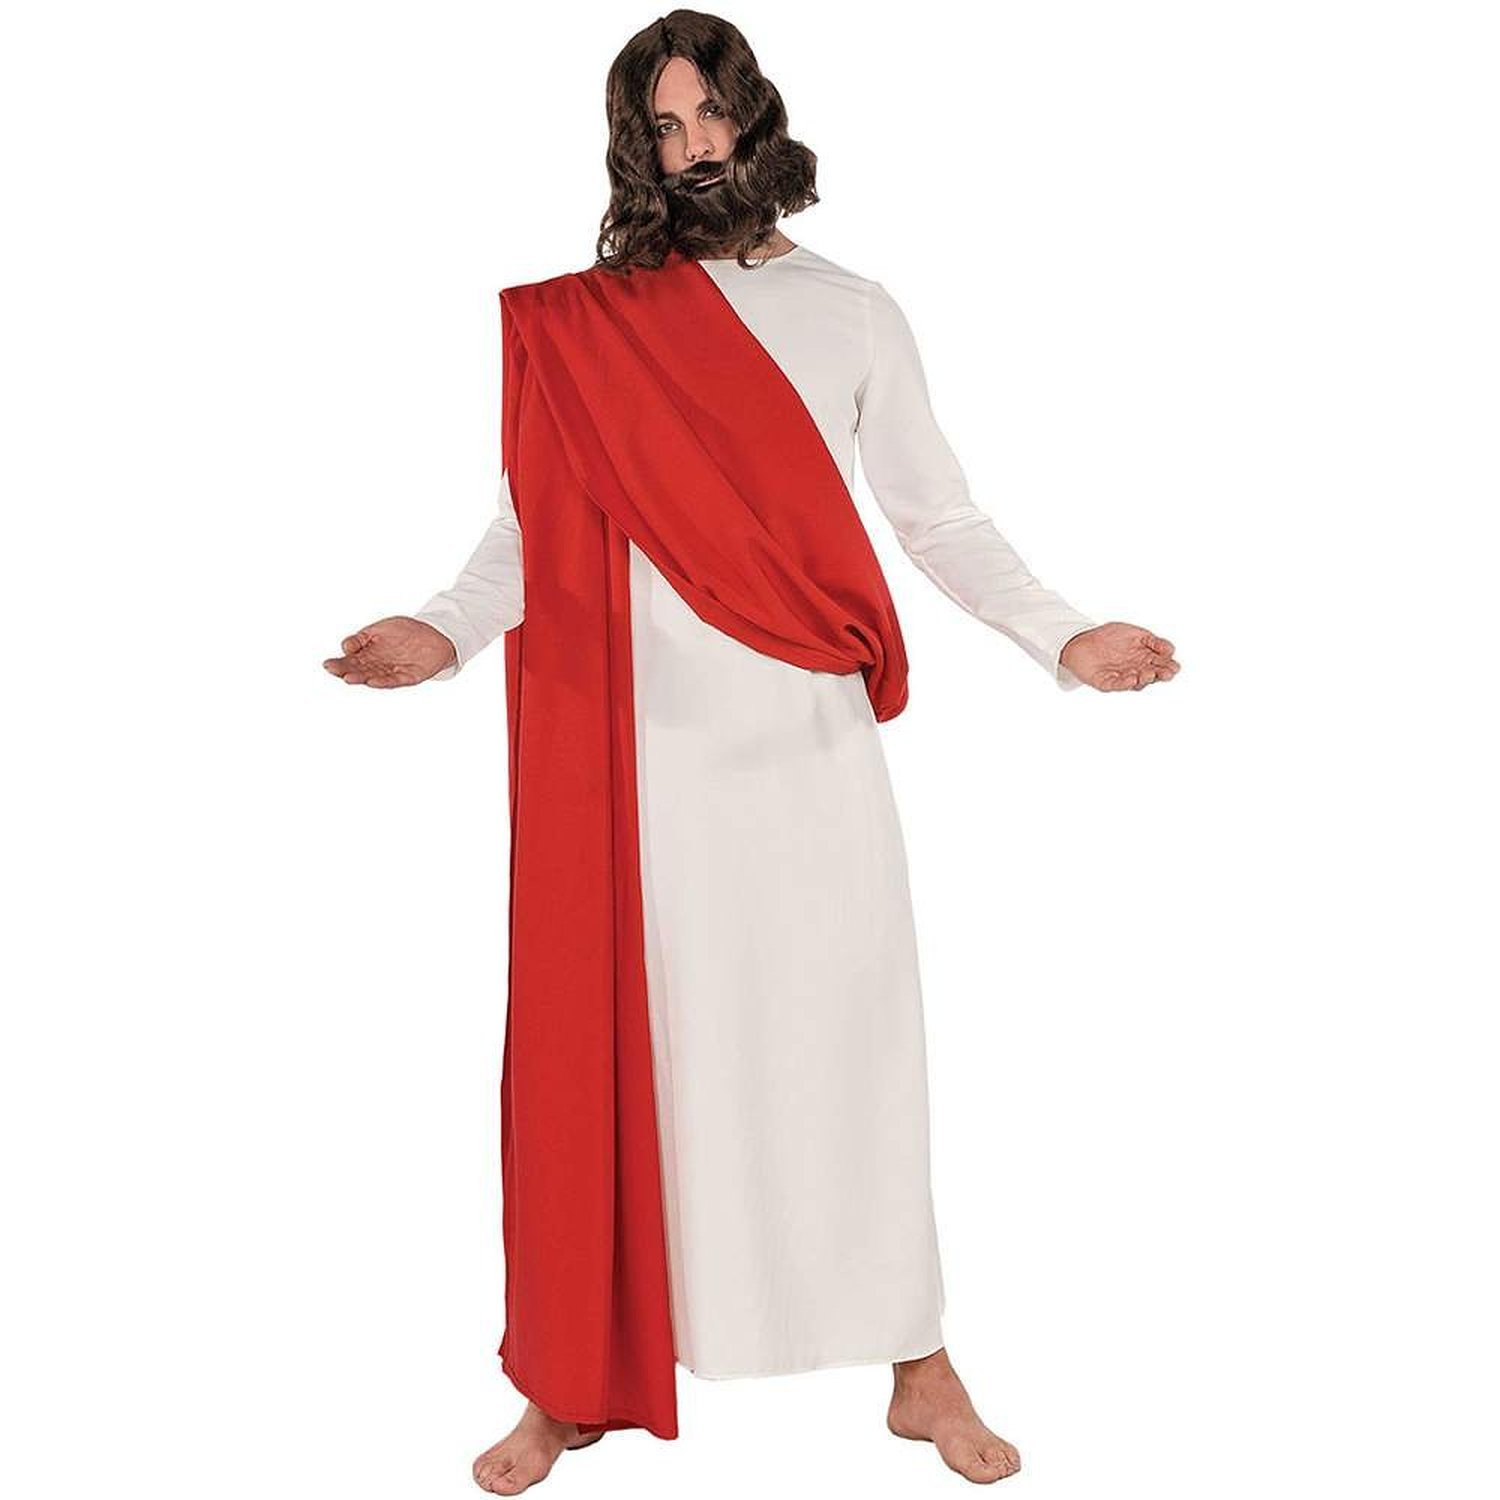 Jesus Costumes - CostumesFC.com